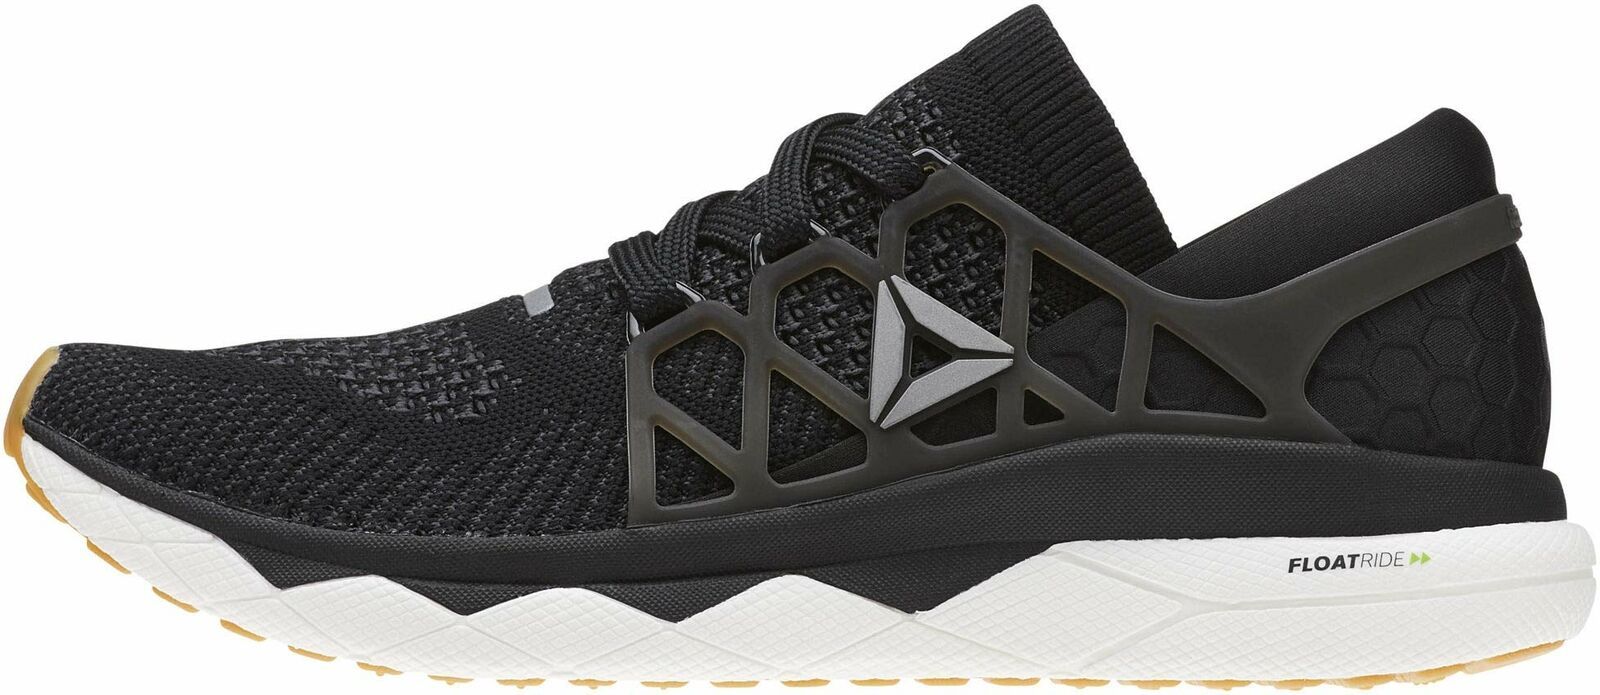 Reebok Floatride Run Ultraknit Mens Running Shoes Black Size 8.5 US - $50.84